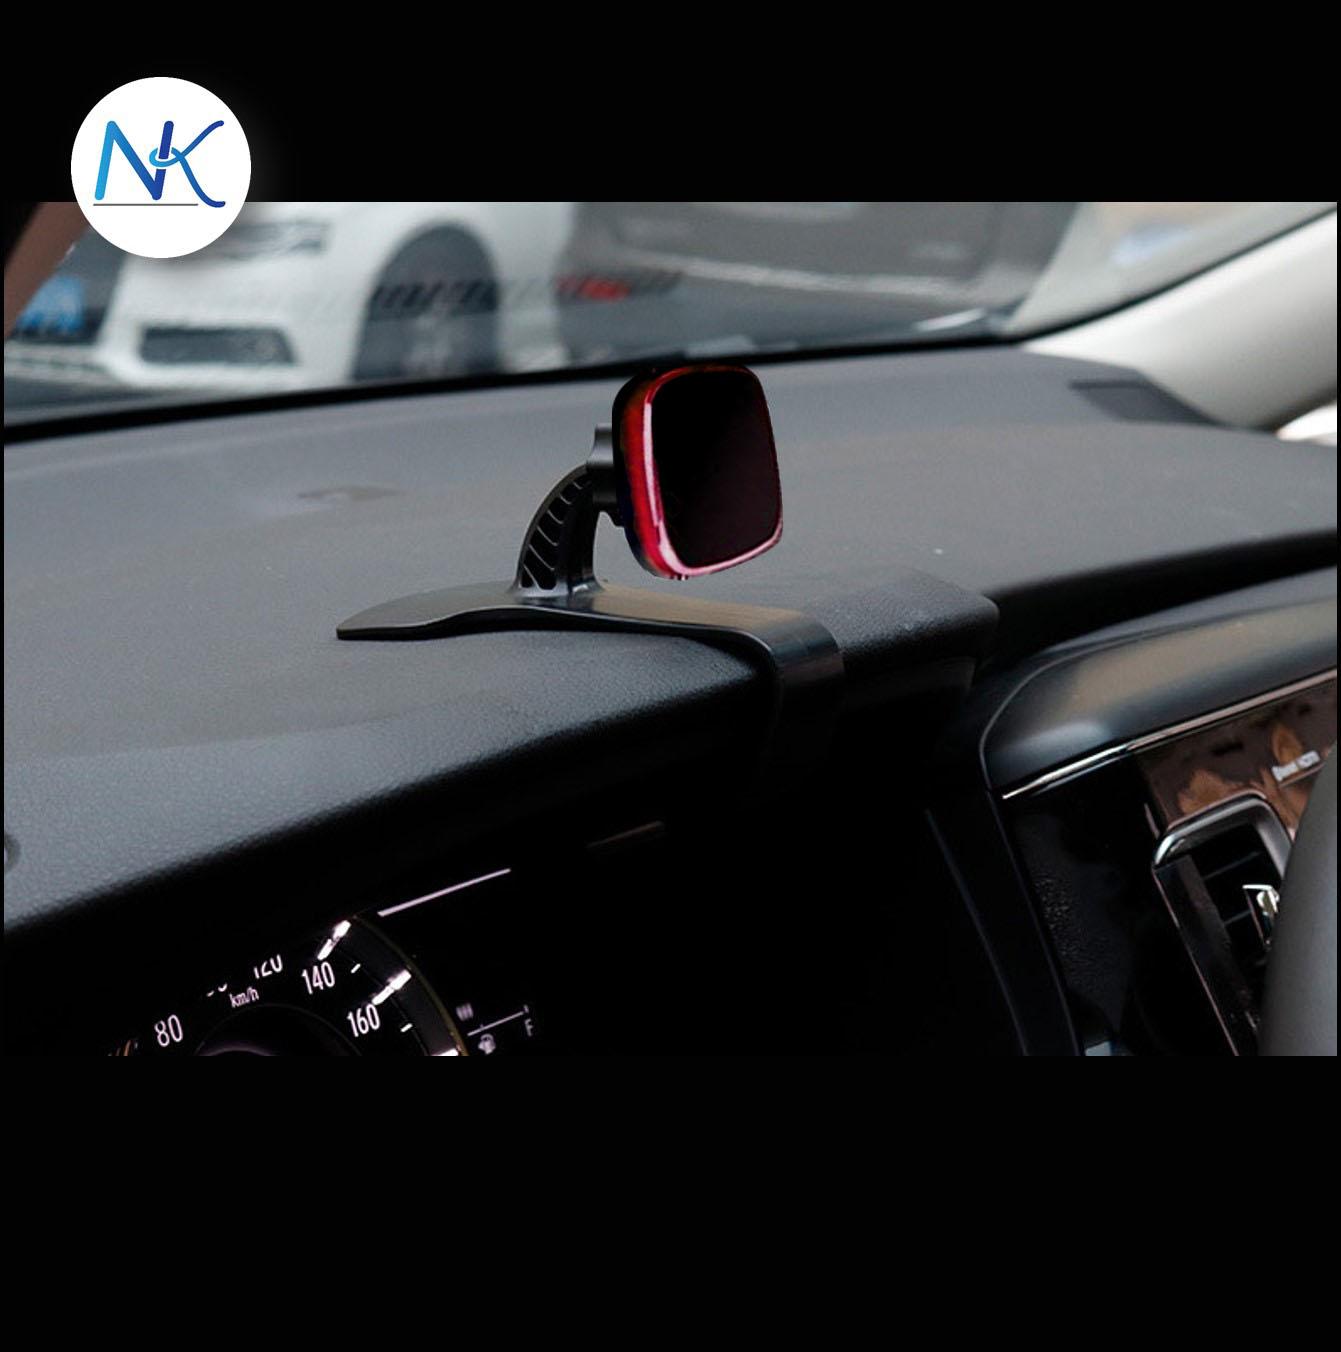 nkshop ที่วางโทรศัพท์ในรถ ที่ยึดโทรศัพท์ในรถ แท่นวางโทรศัพท์ในรถ หมุนปรับระดับได้ หนีบคอนโซล แม่เหล็ก